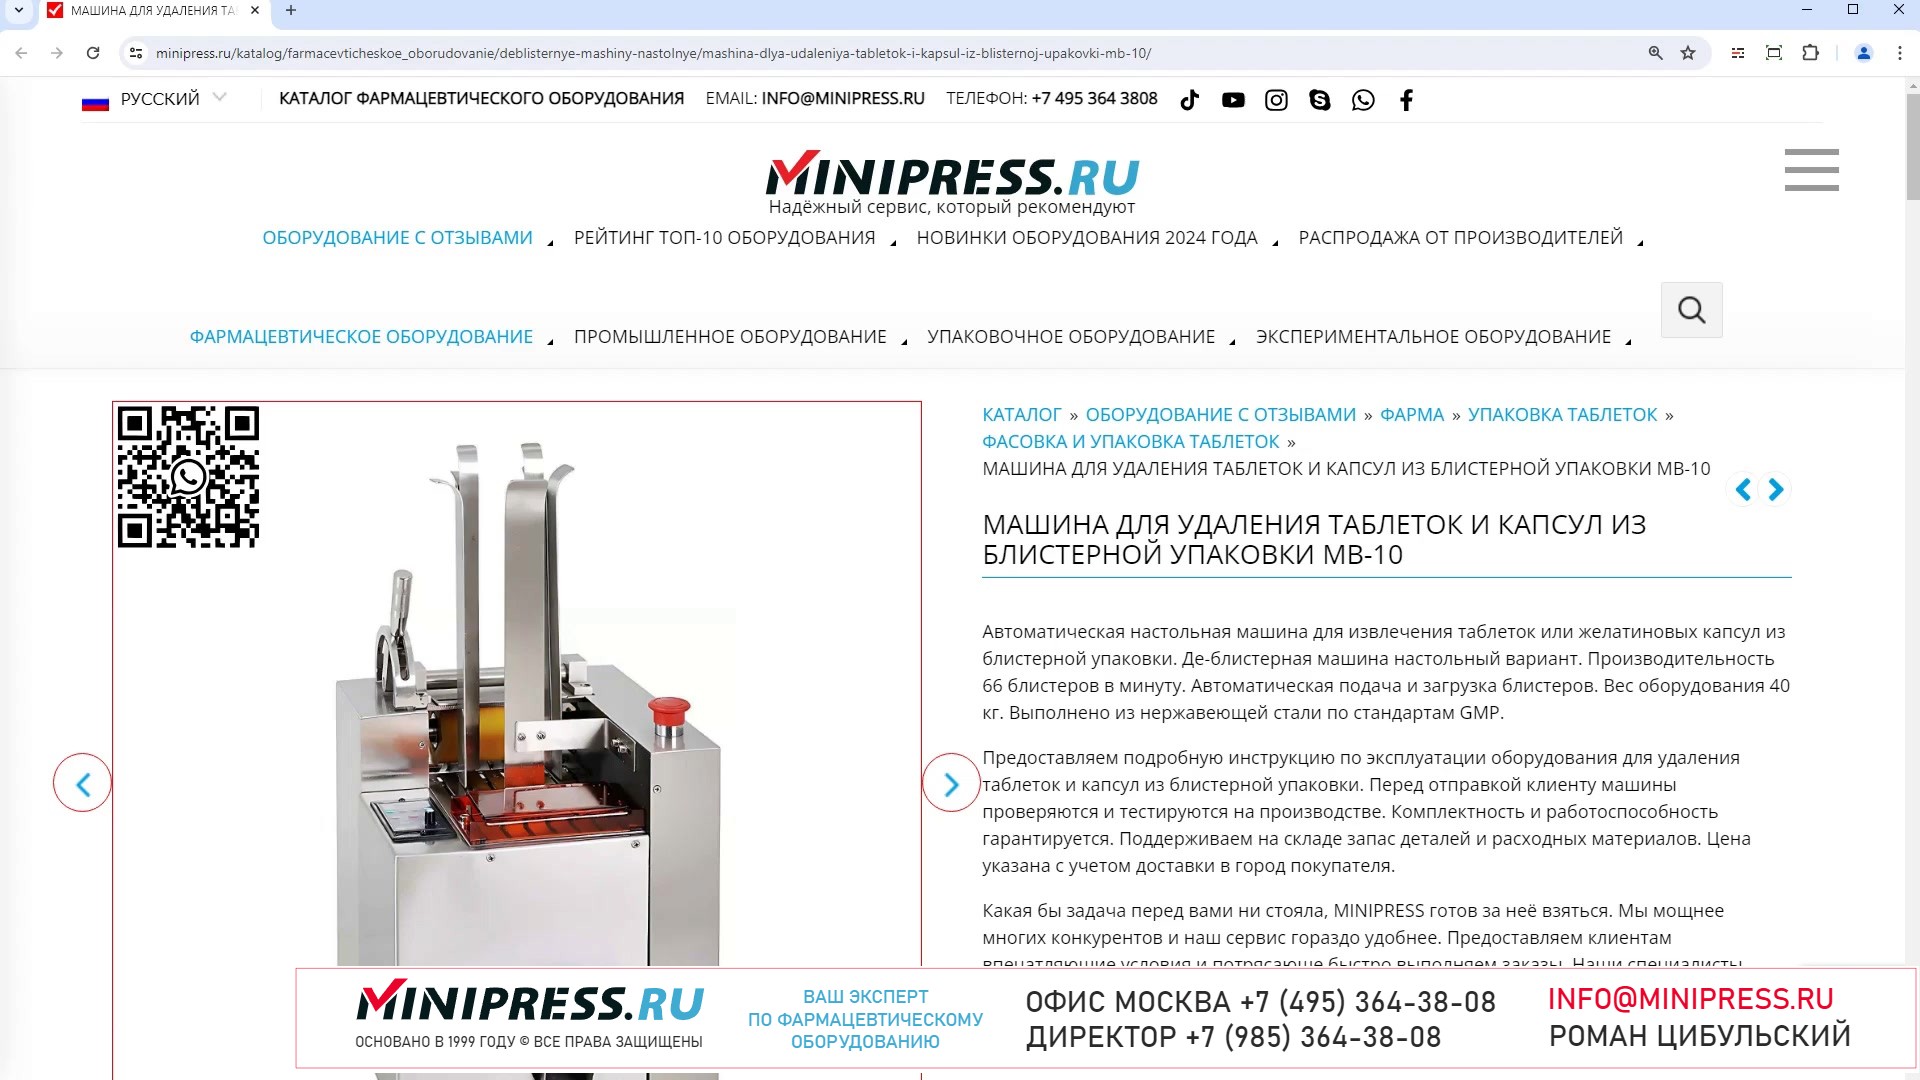 Minipress.ru Машина для удаления таблеток и капсул из блистерной упаковки MB-10